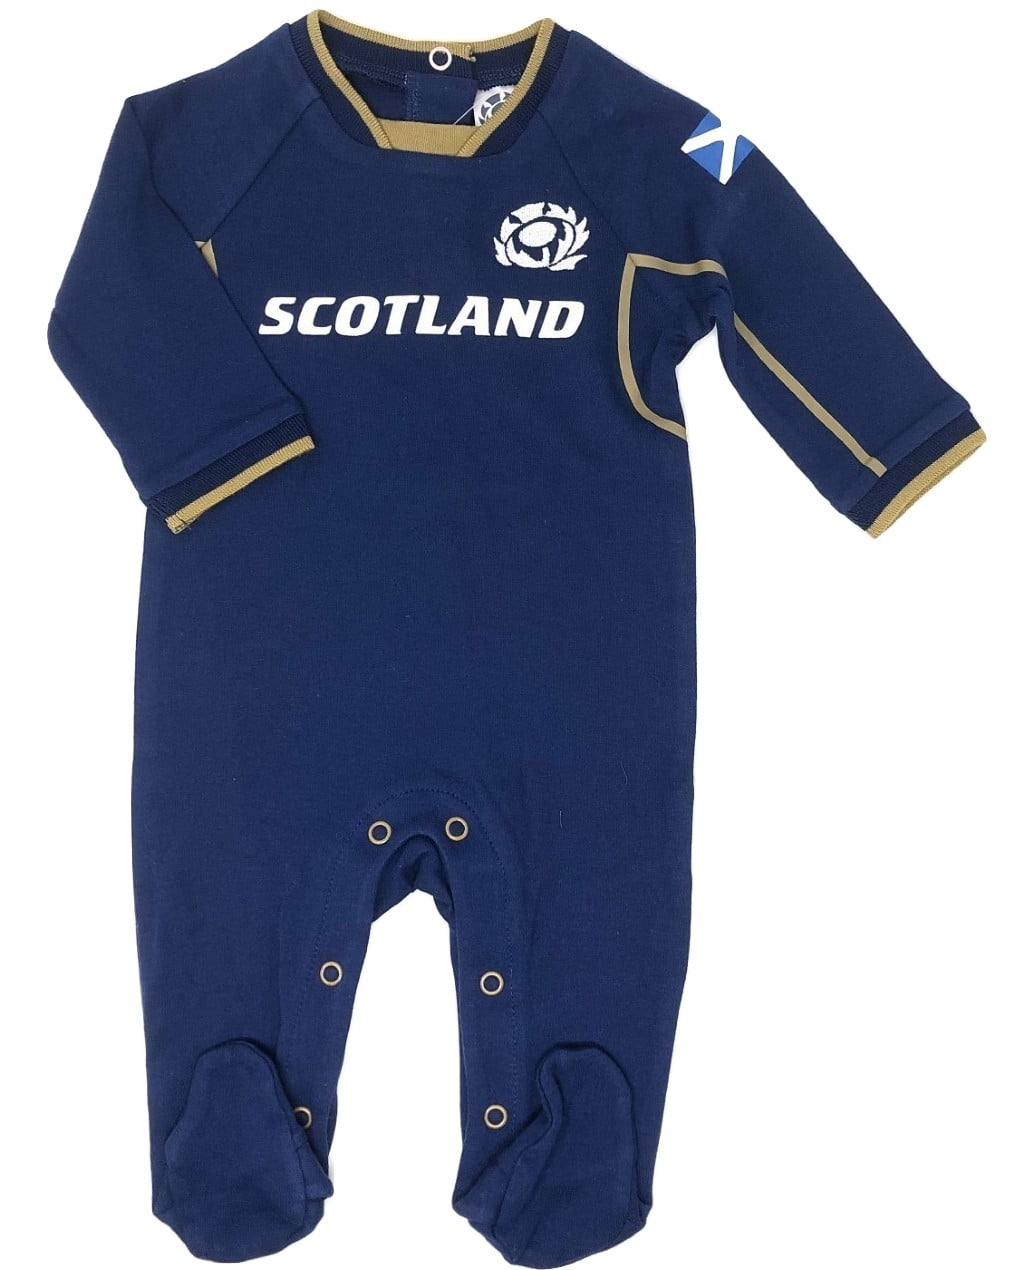 Scotland Rugby Boys Girls Baby Grow Sleepsuit 